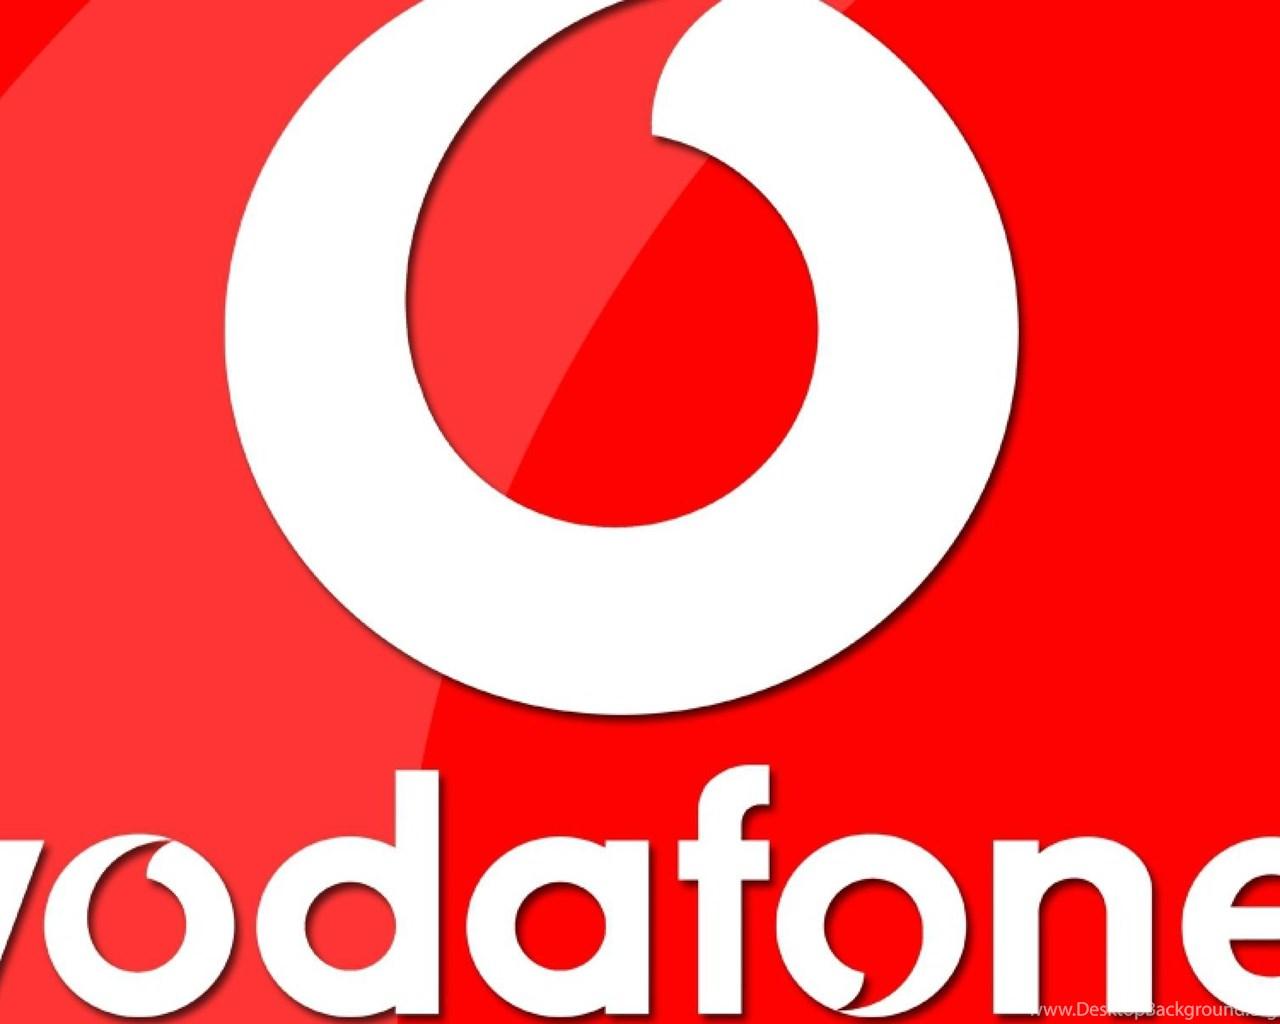 Vodafone Shares Slip As Verizon Denies Deal | Business News | Sky News